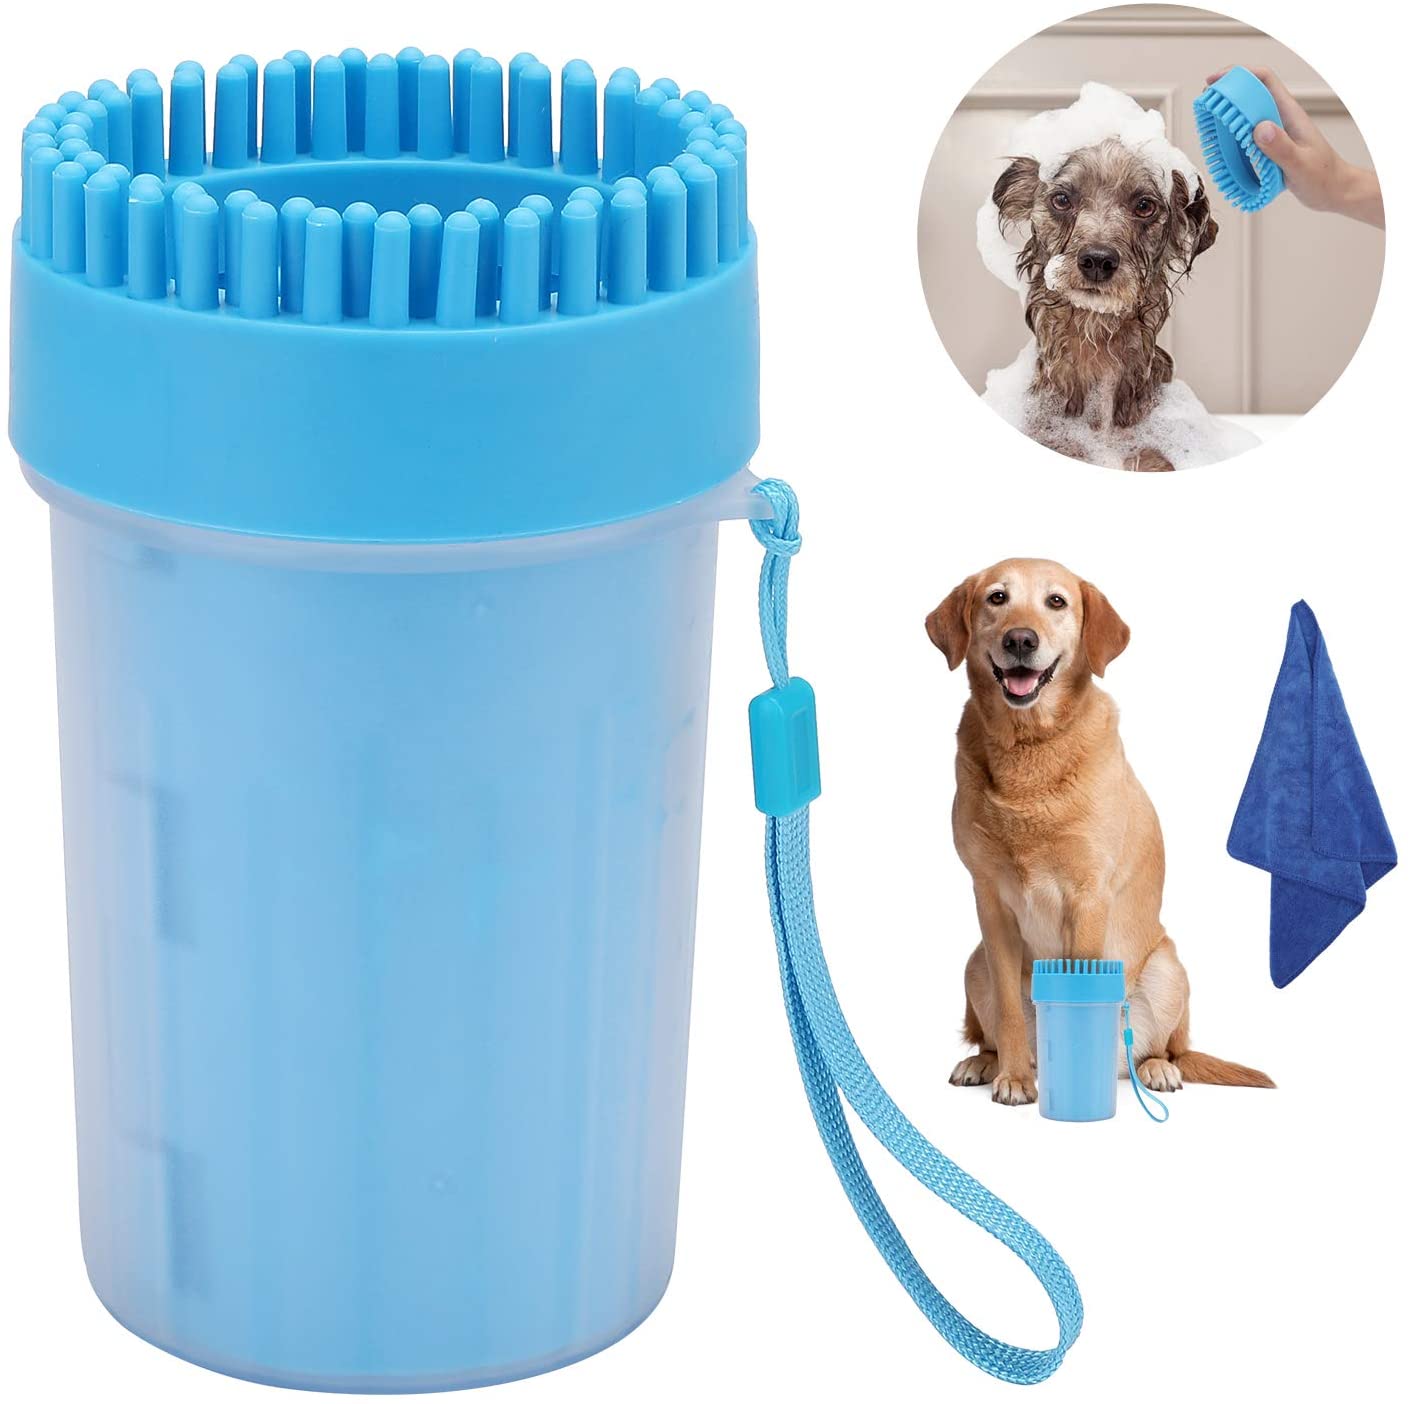  EKKONG Limpiador de Huellas de Perro, Lavadora de pies de Perro, Mascota portátil Limpiador con Toalla para Limpiar Pies Sucios de Mascotas (Azul) 